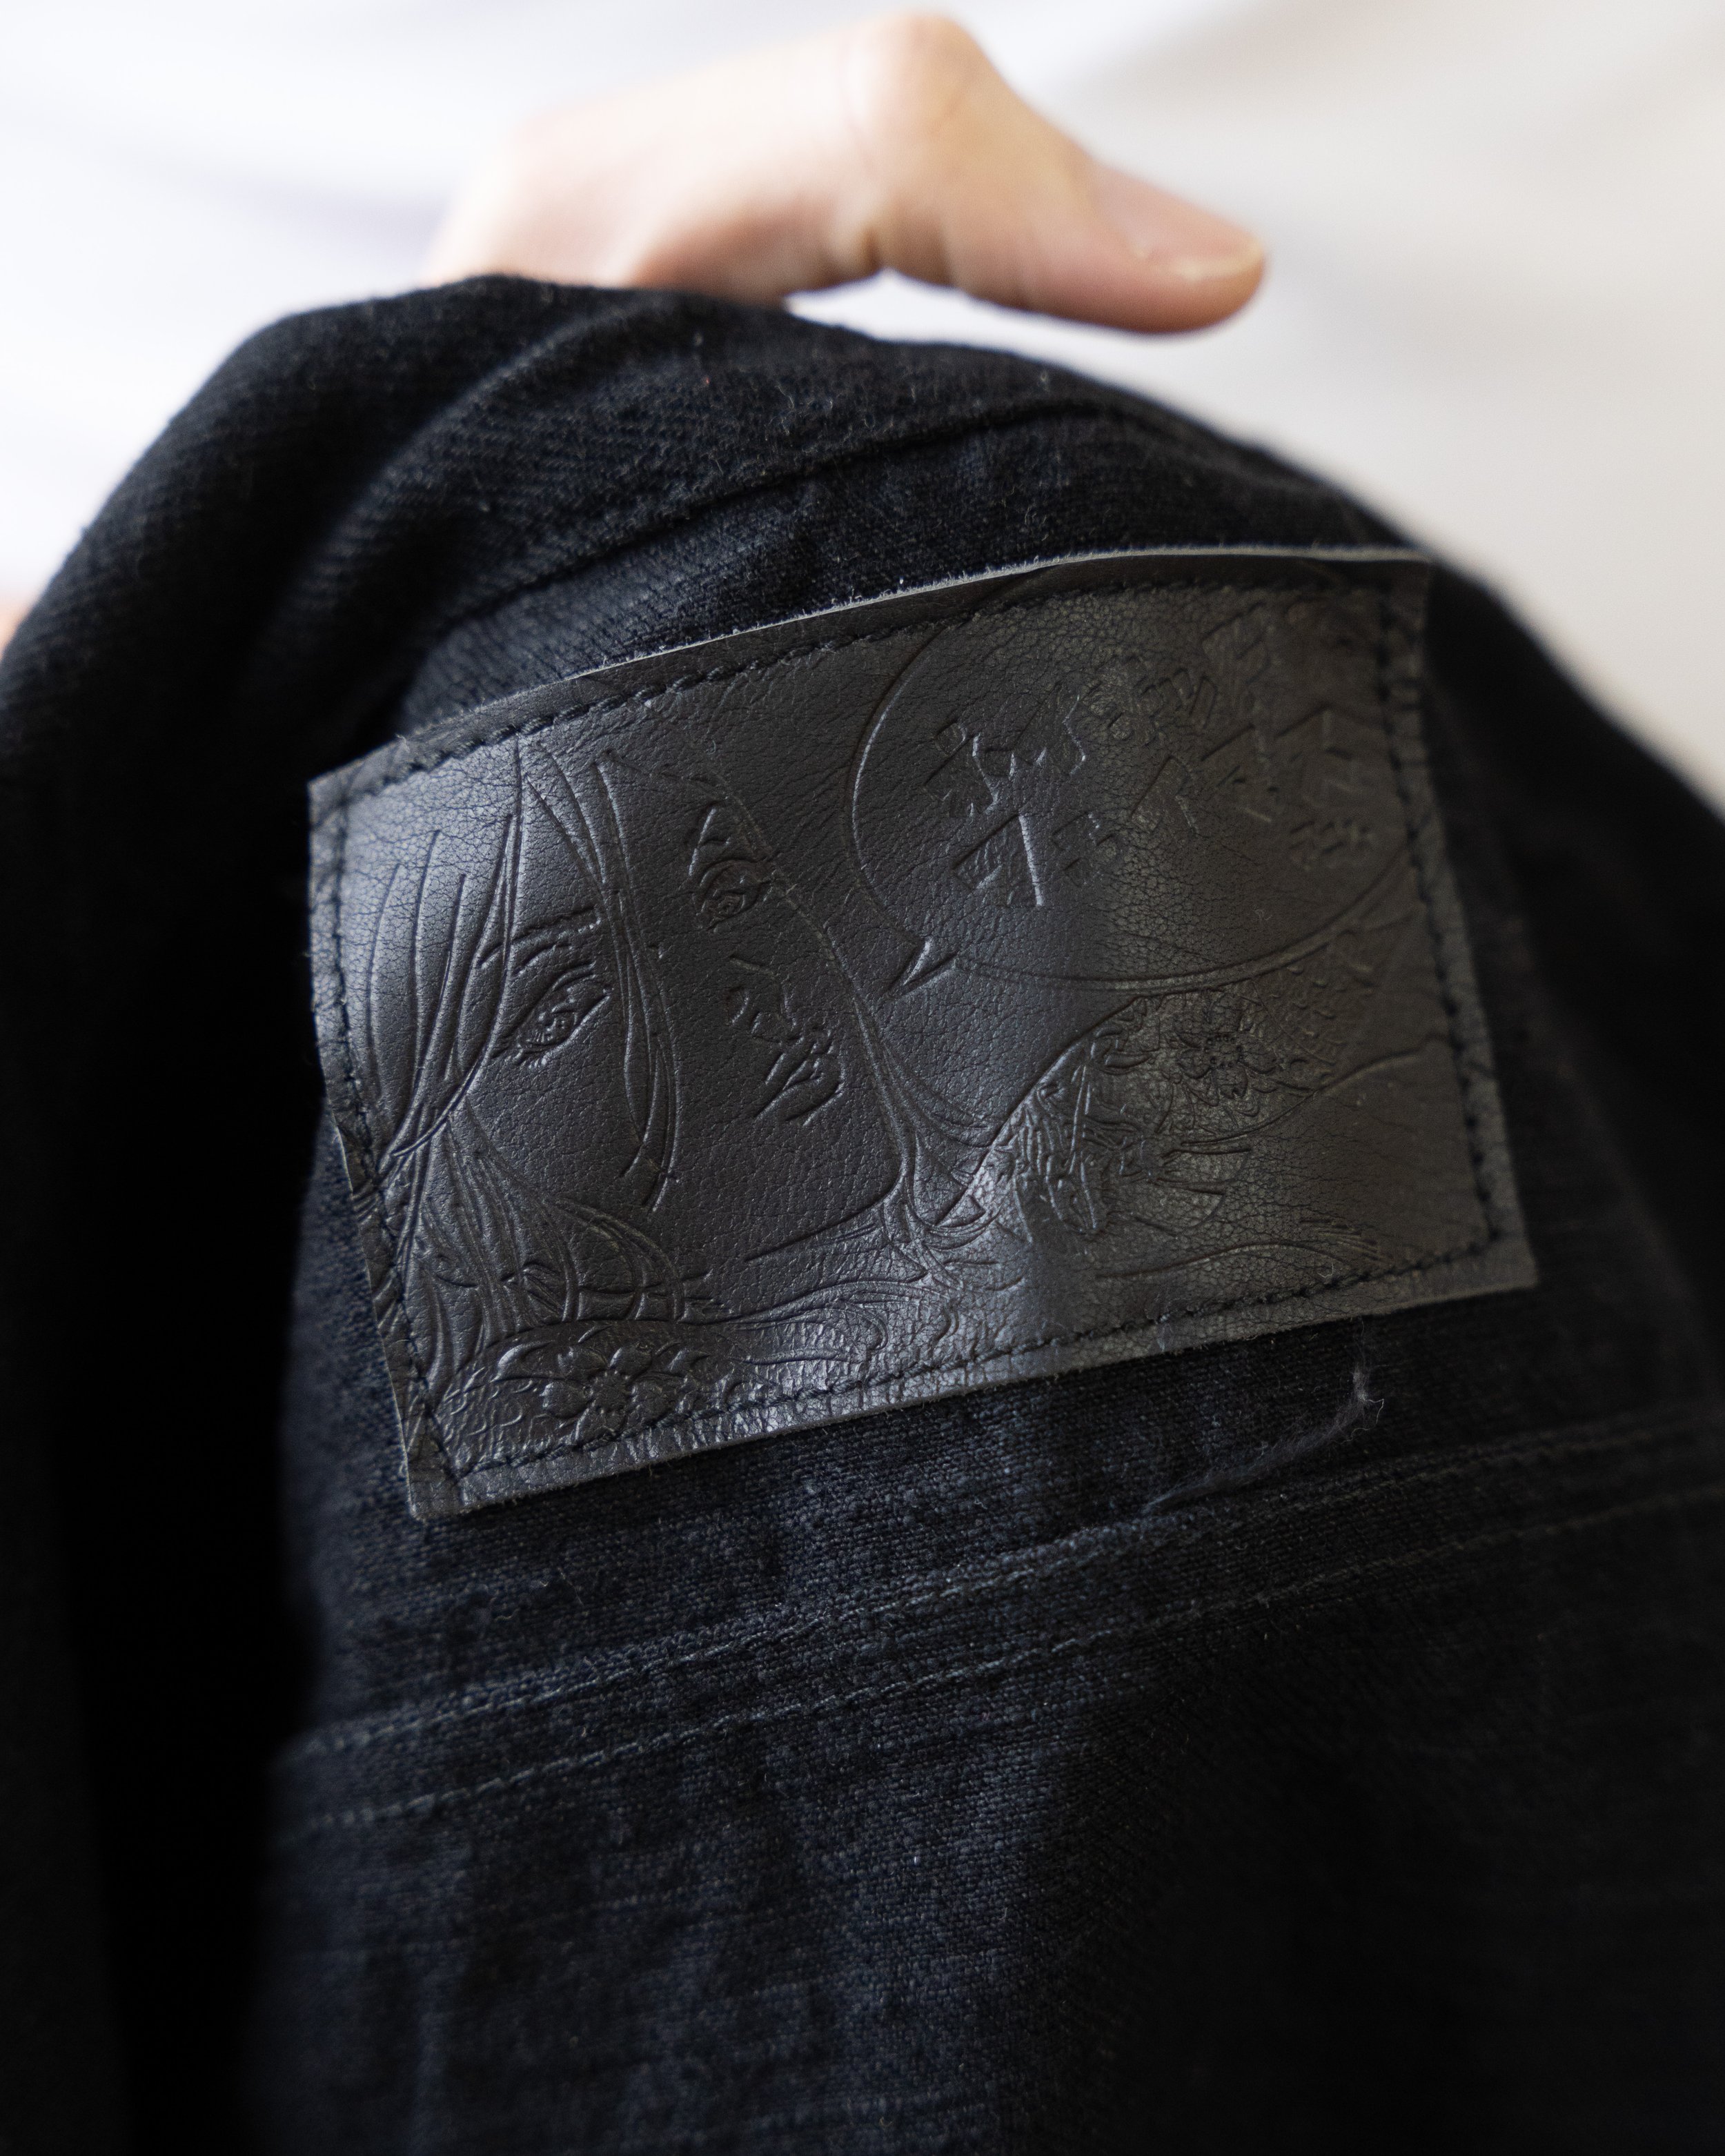 MIJ13 - Okayama Spirit Kuro - Lifestyle - Heritage Jacket Leather Patch